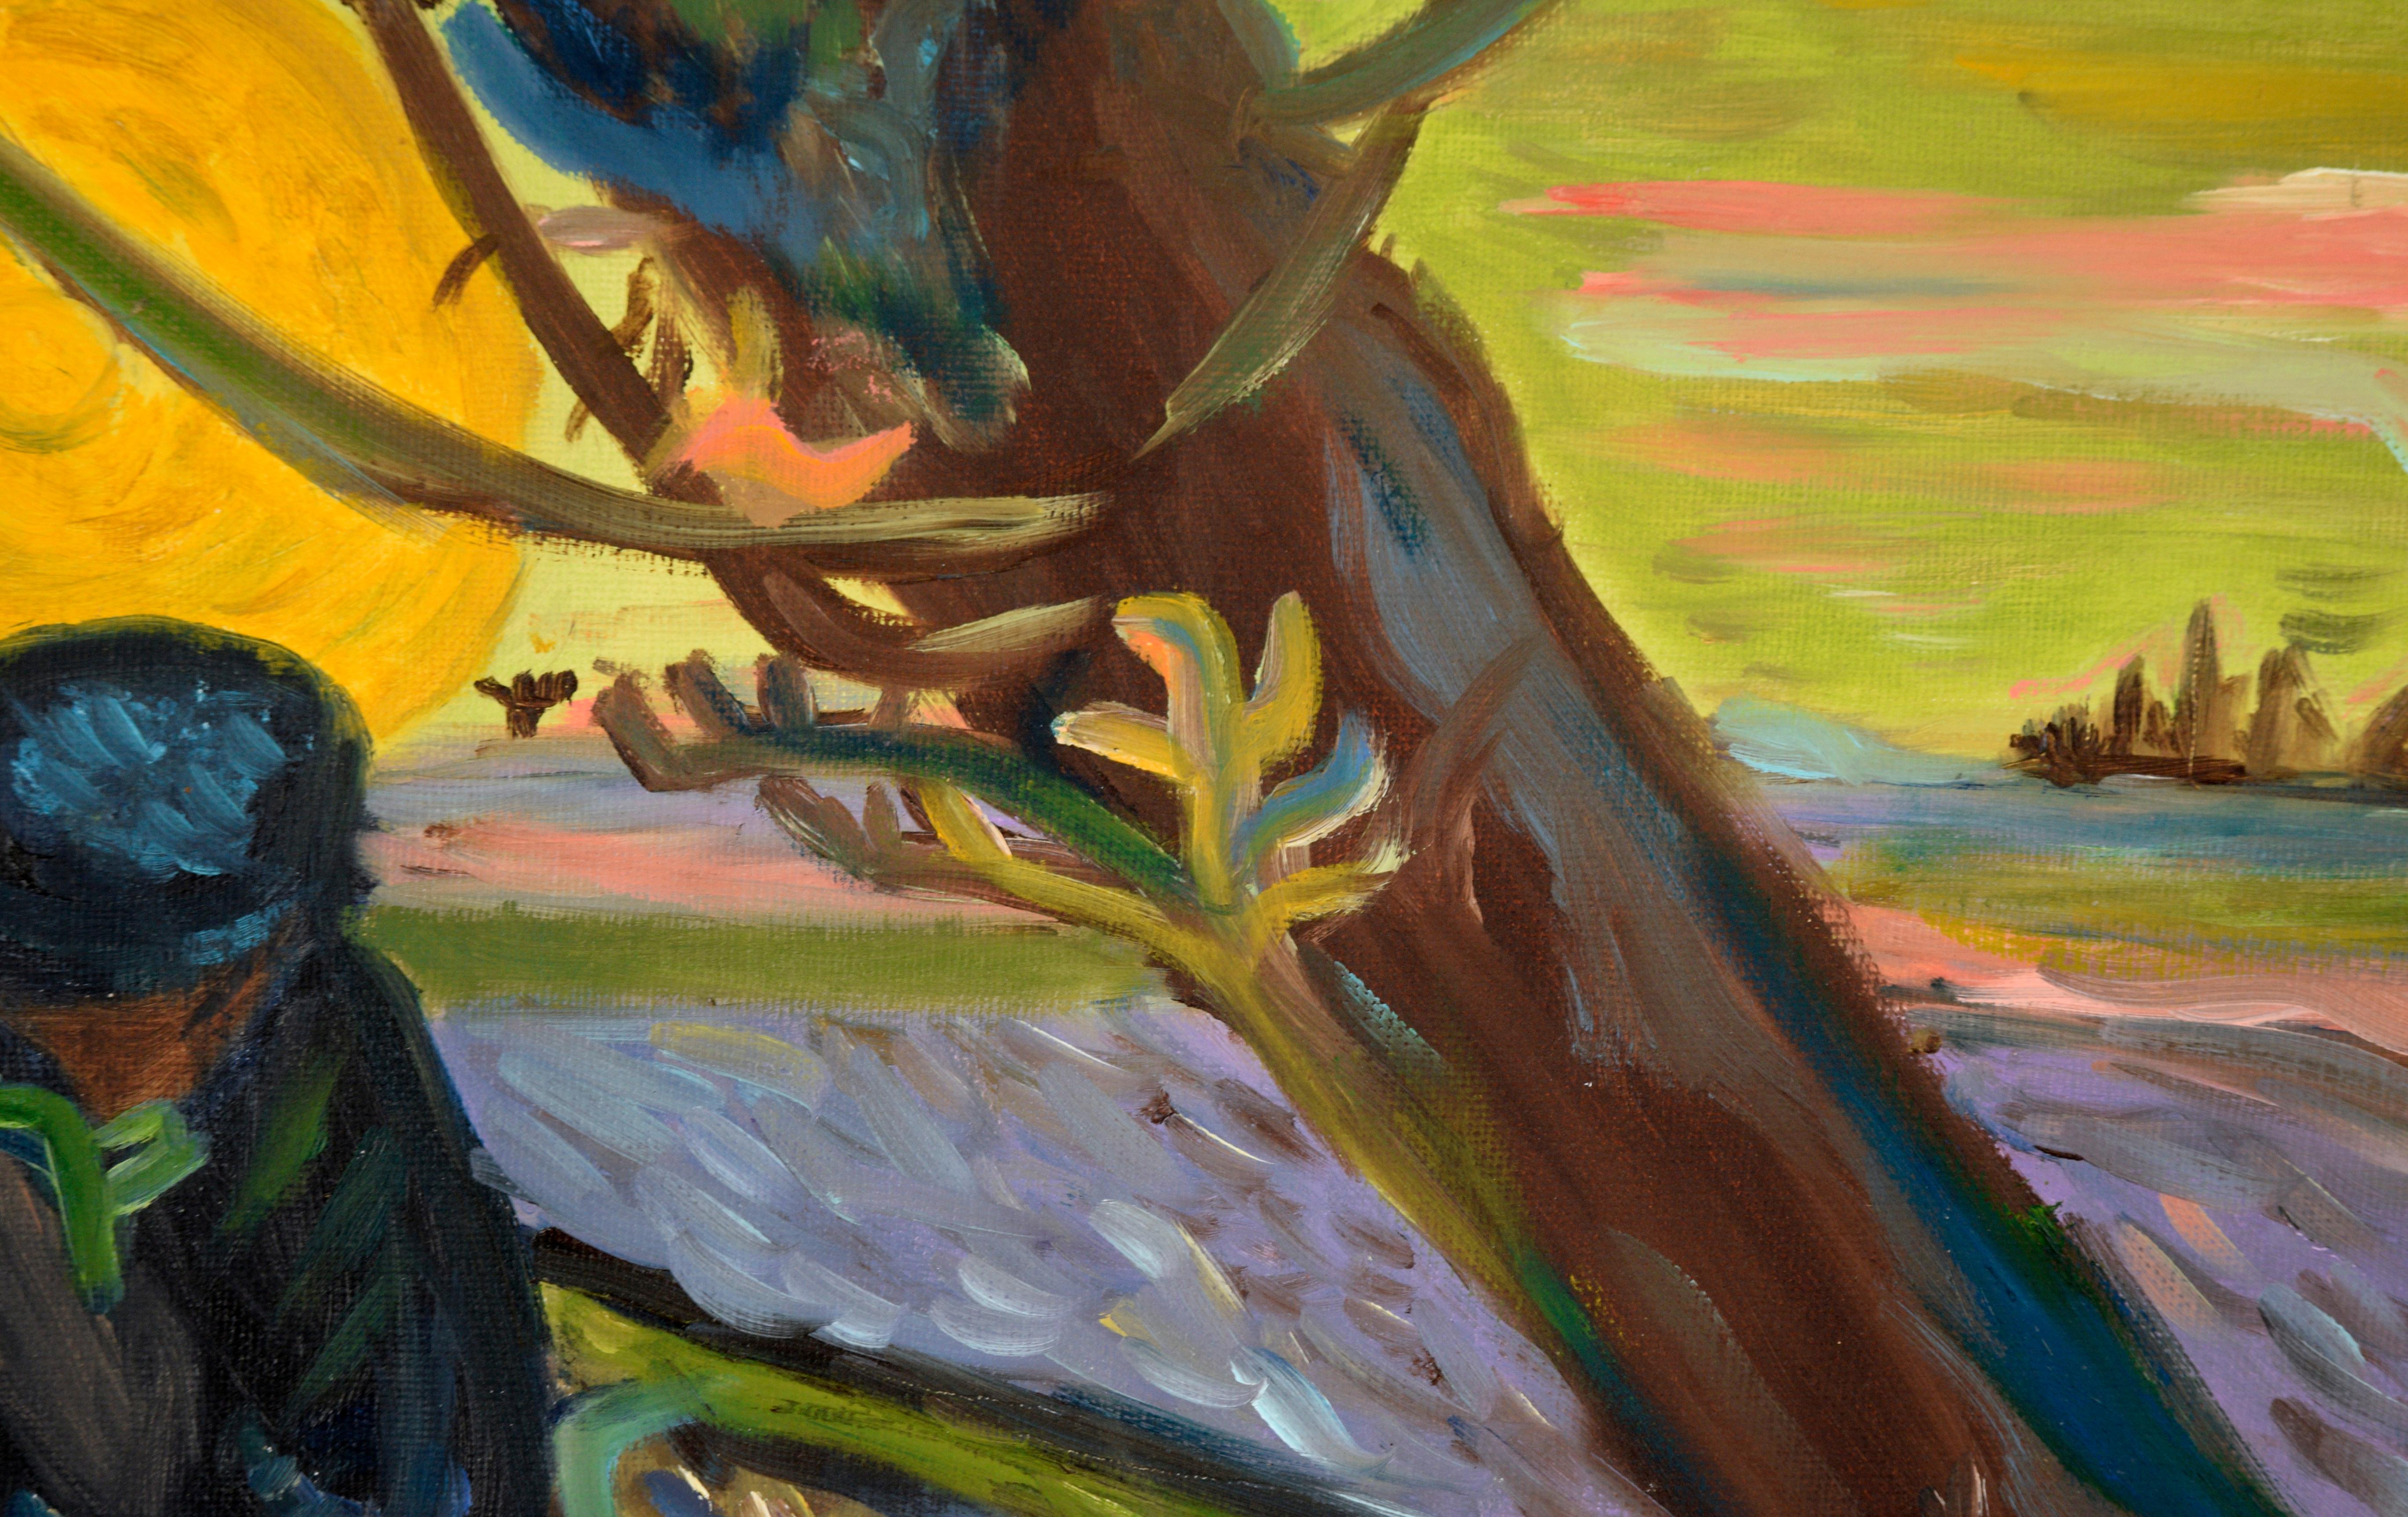 Harvesting at Sunrise - Post Impressionist Landscape - Post-Impressionist Painting by Unknown